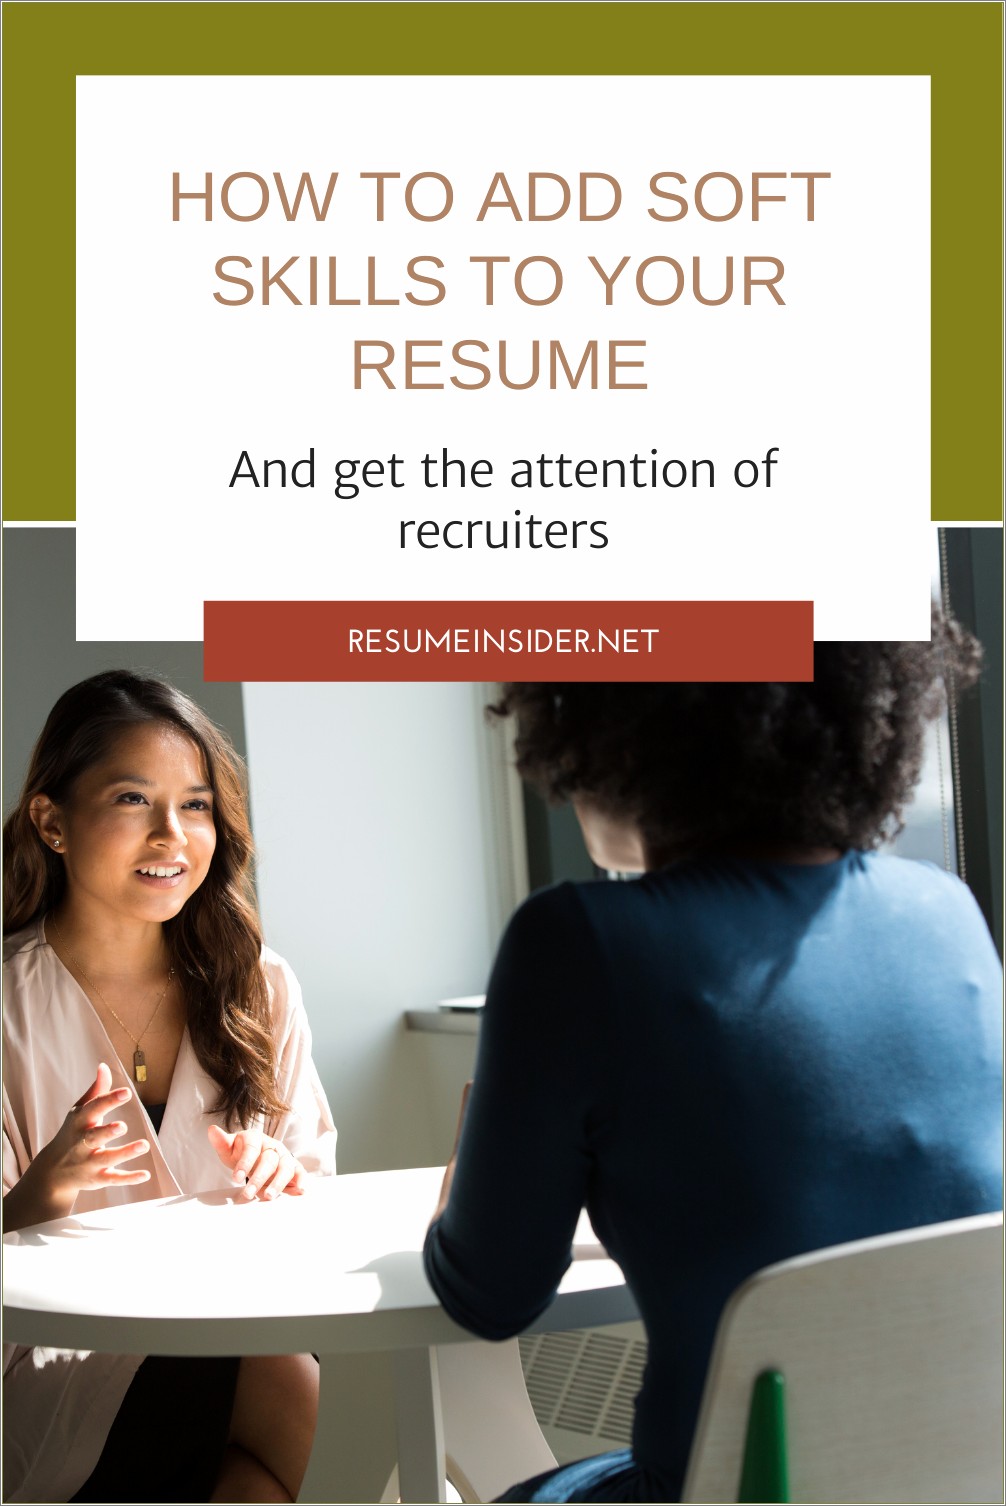 Resume Find Ways To Add New Skills